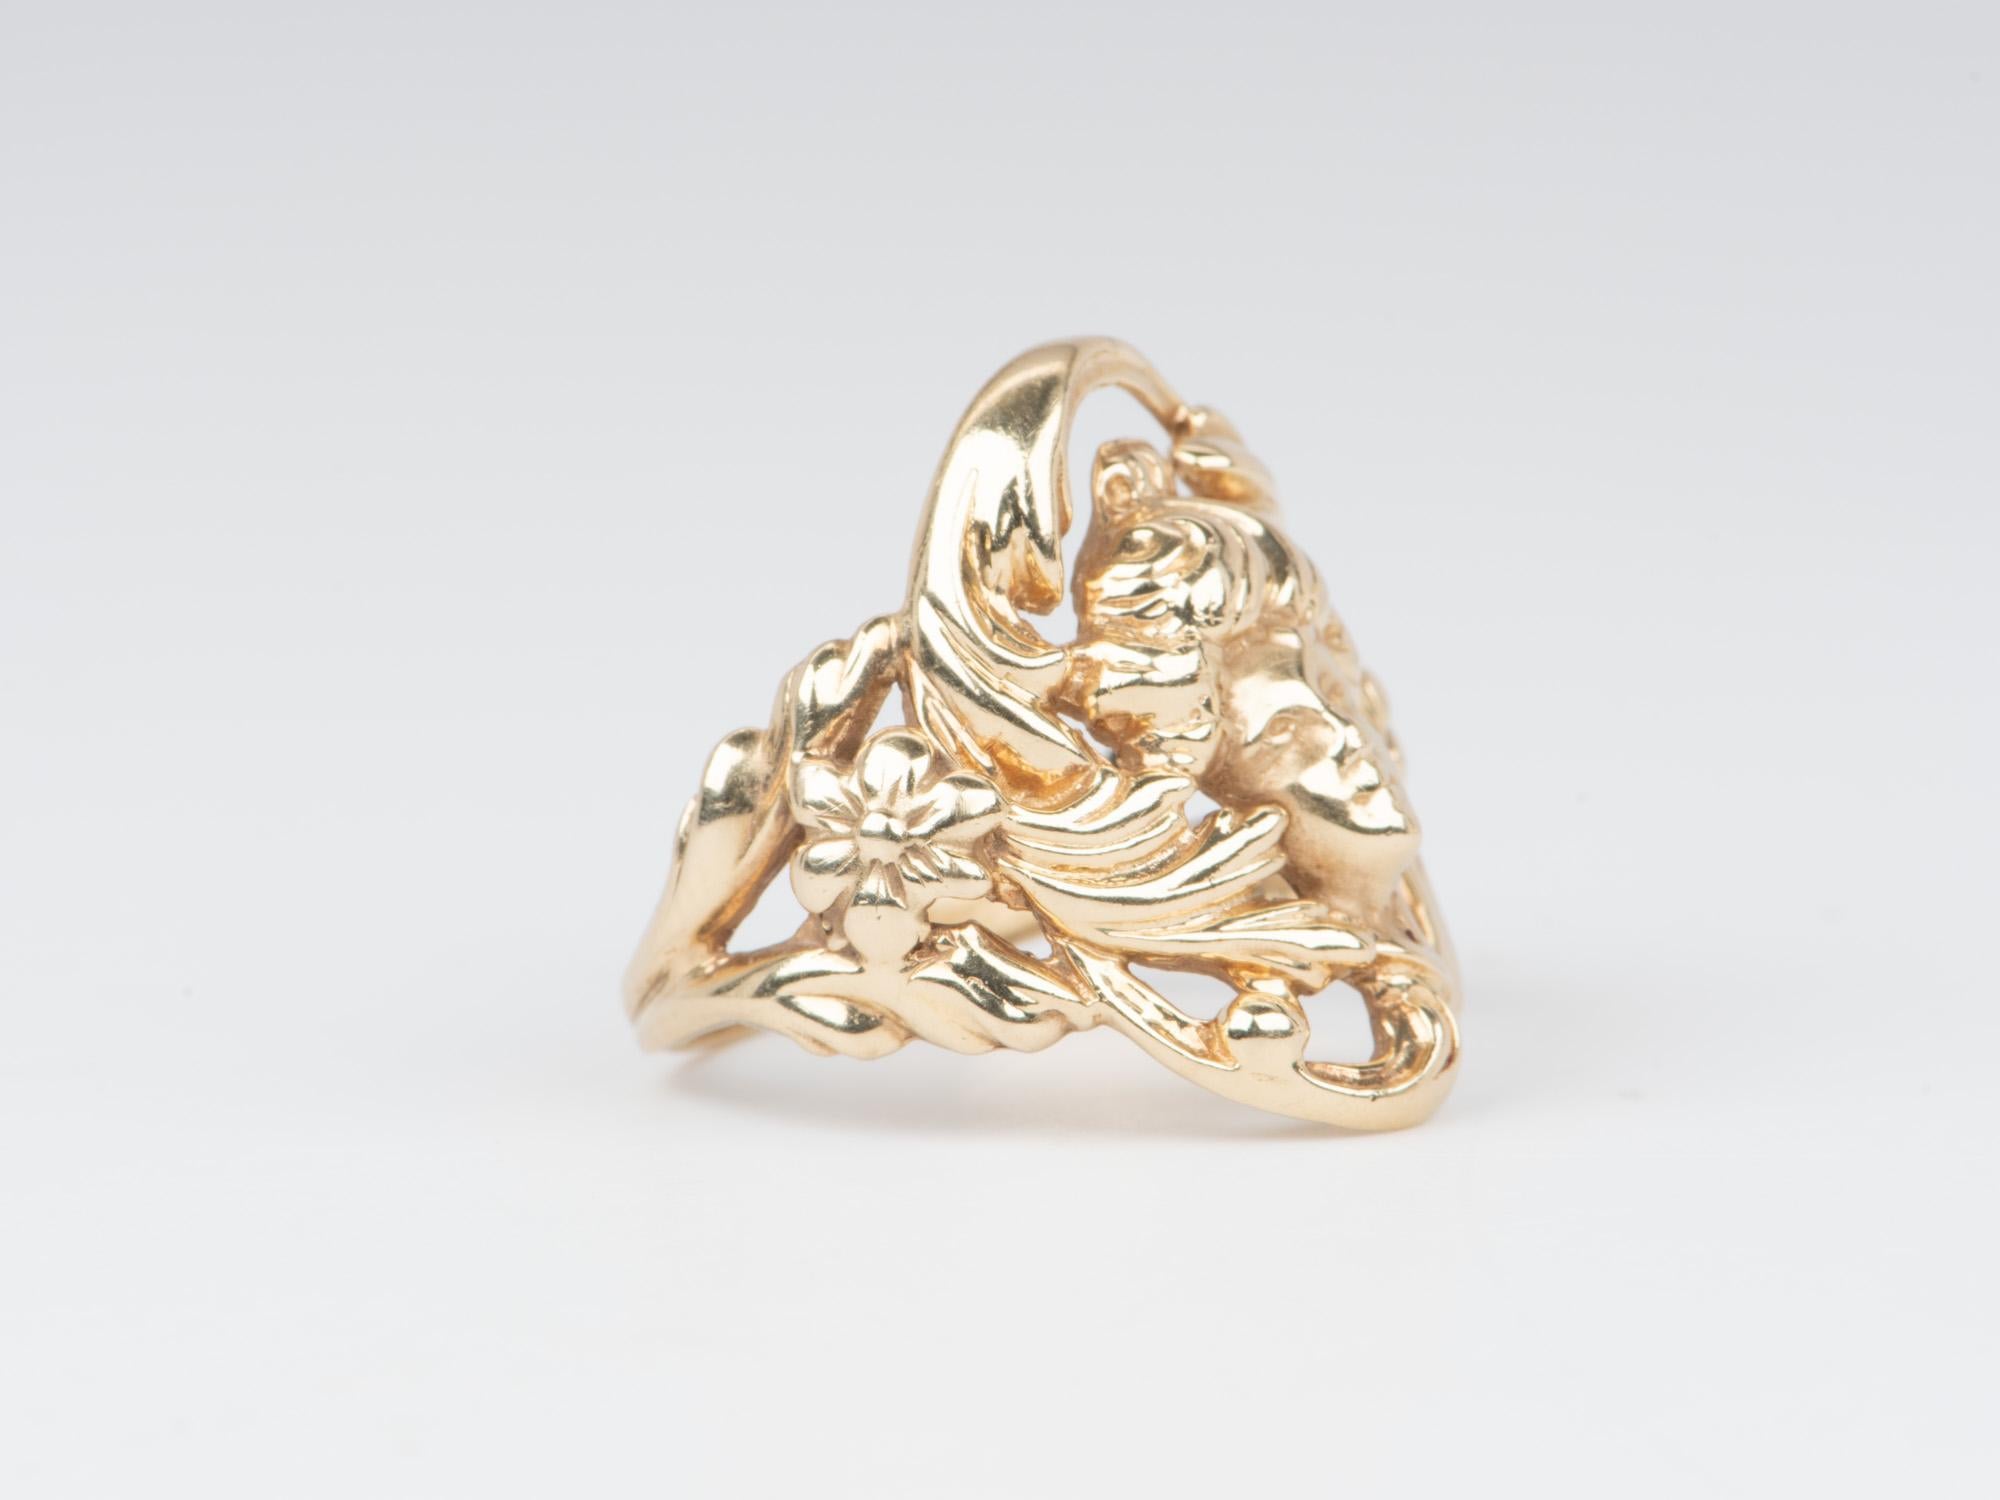 Women's or Men's Vintage Jewelry Art Nouveau Floral Woman Ring 14K Gold 7g V1100 For Sale